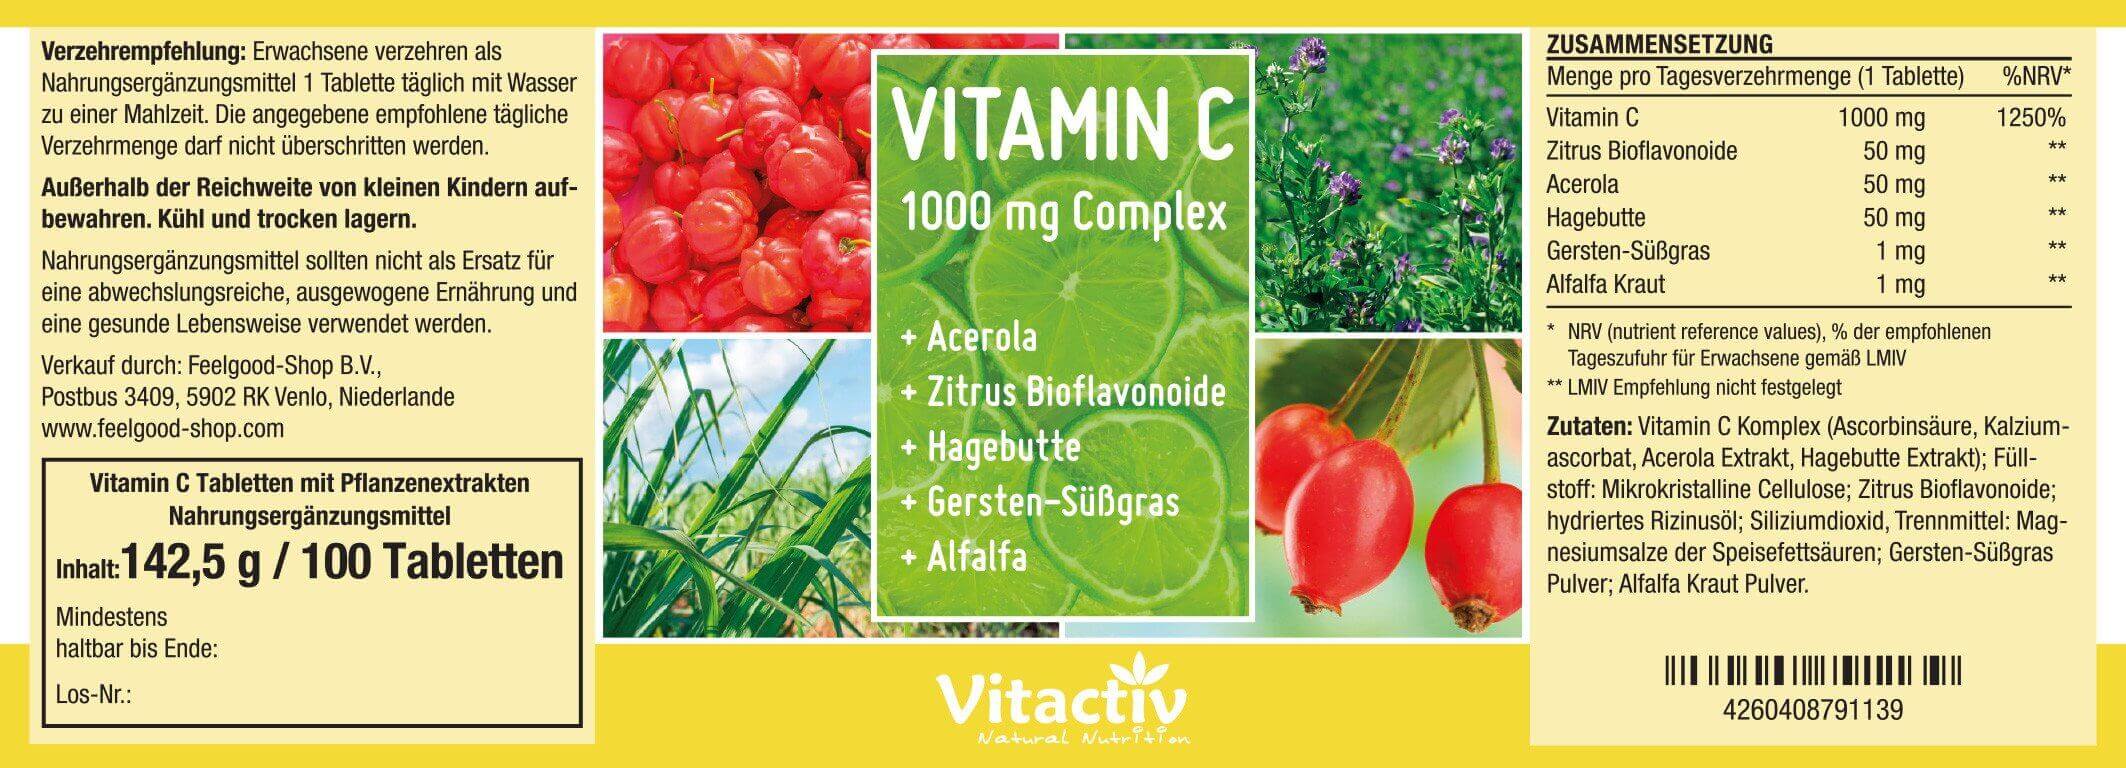 VITAMIN C 1000mg Complex + Acerola Etikett